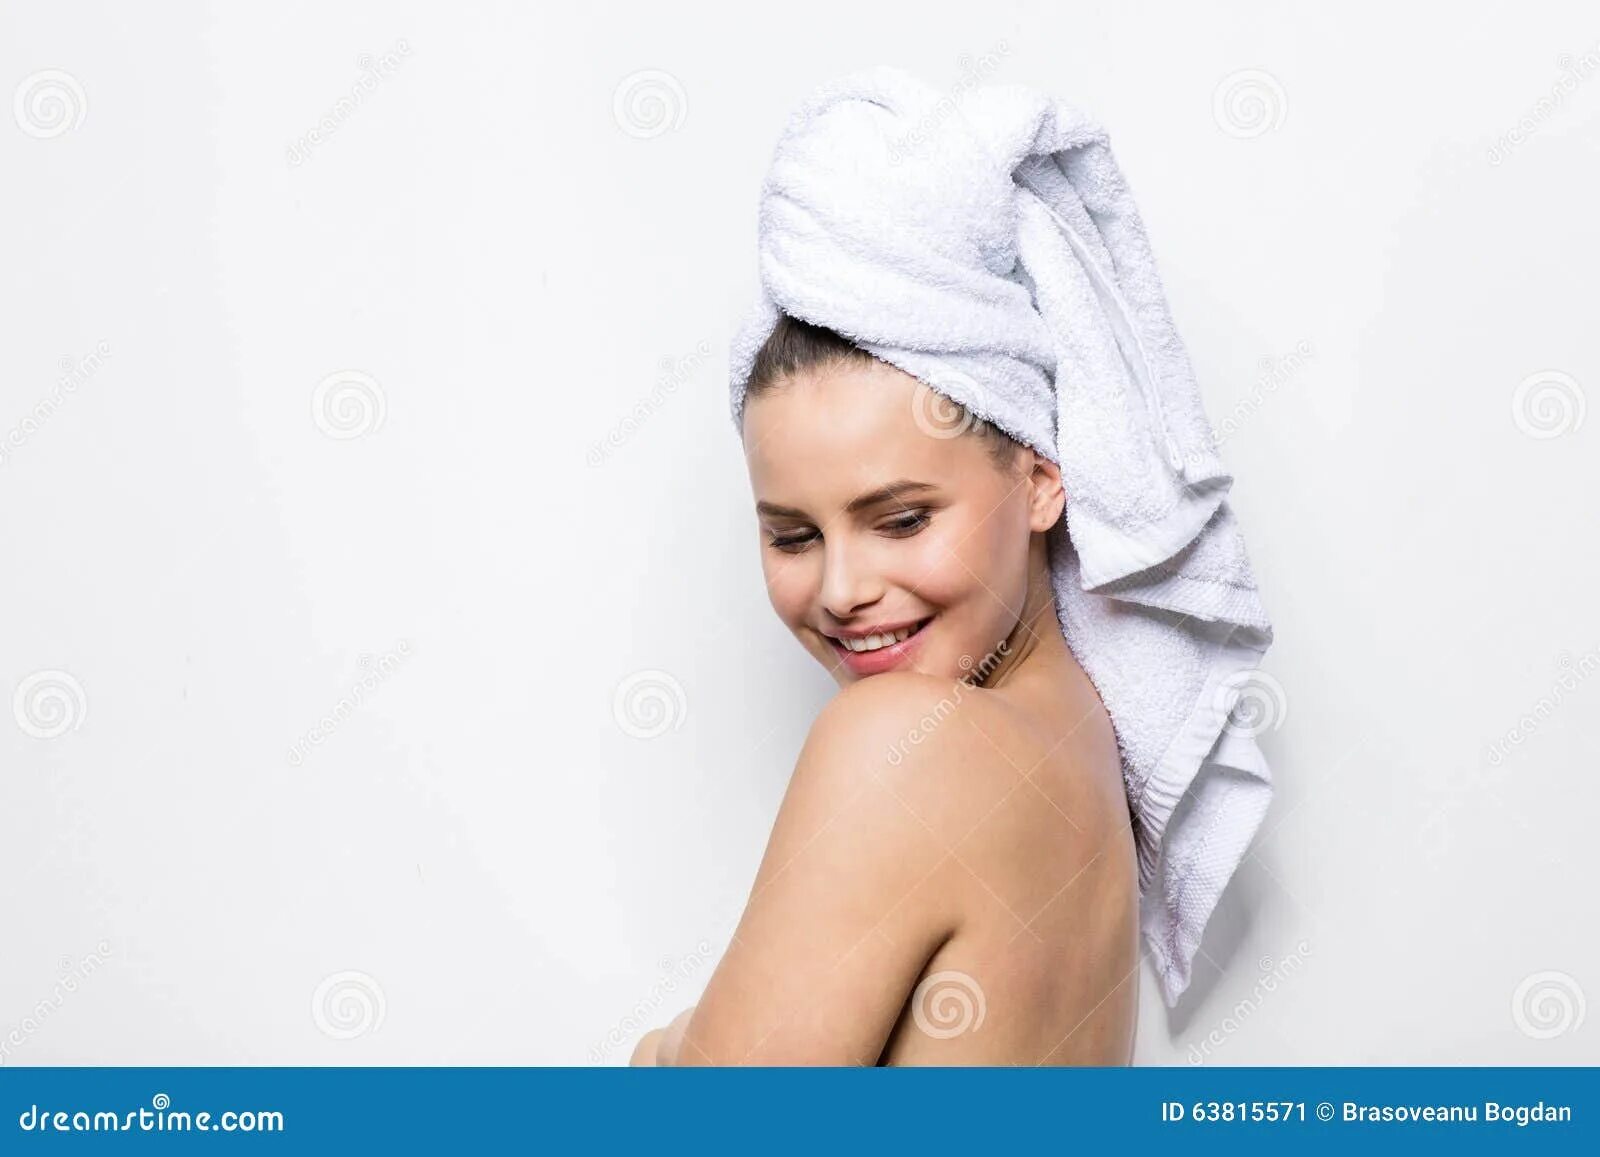 Прикрылась полотенцем. Полотенце на голове. Девушка в полотенце. Баба с полотенцем на голове. Лицо девушки с полотенцем на голове.